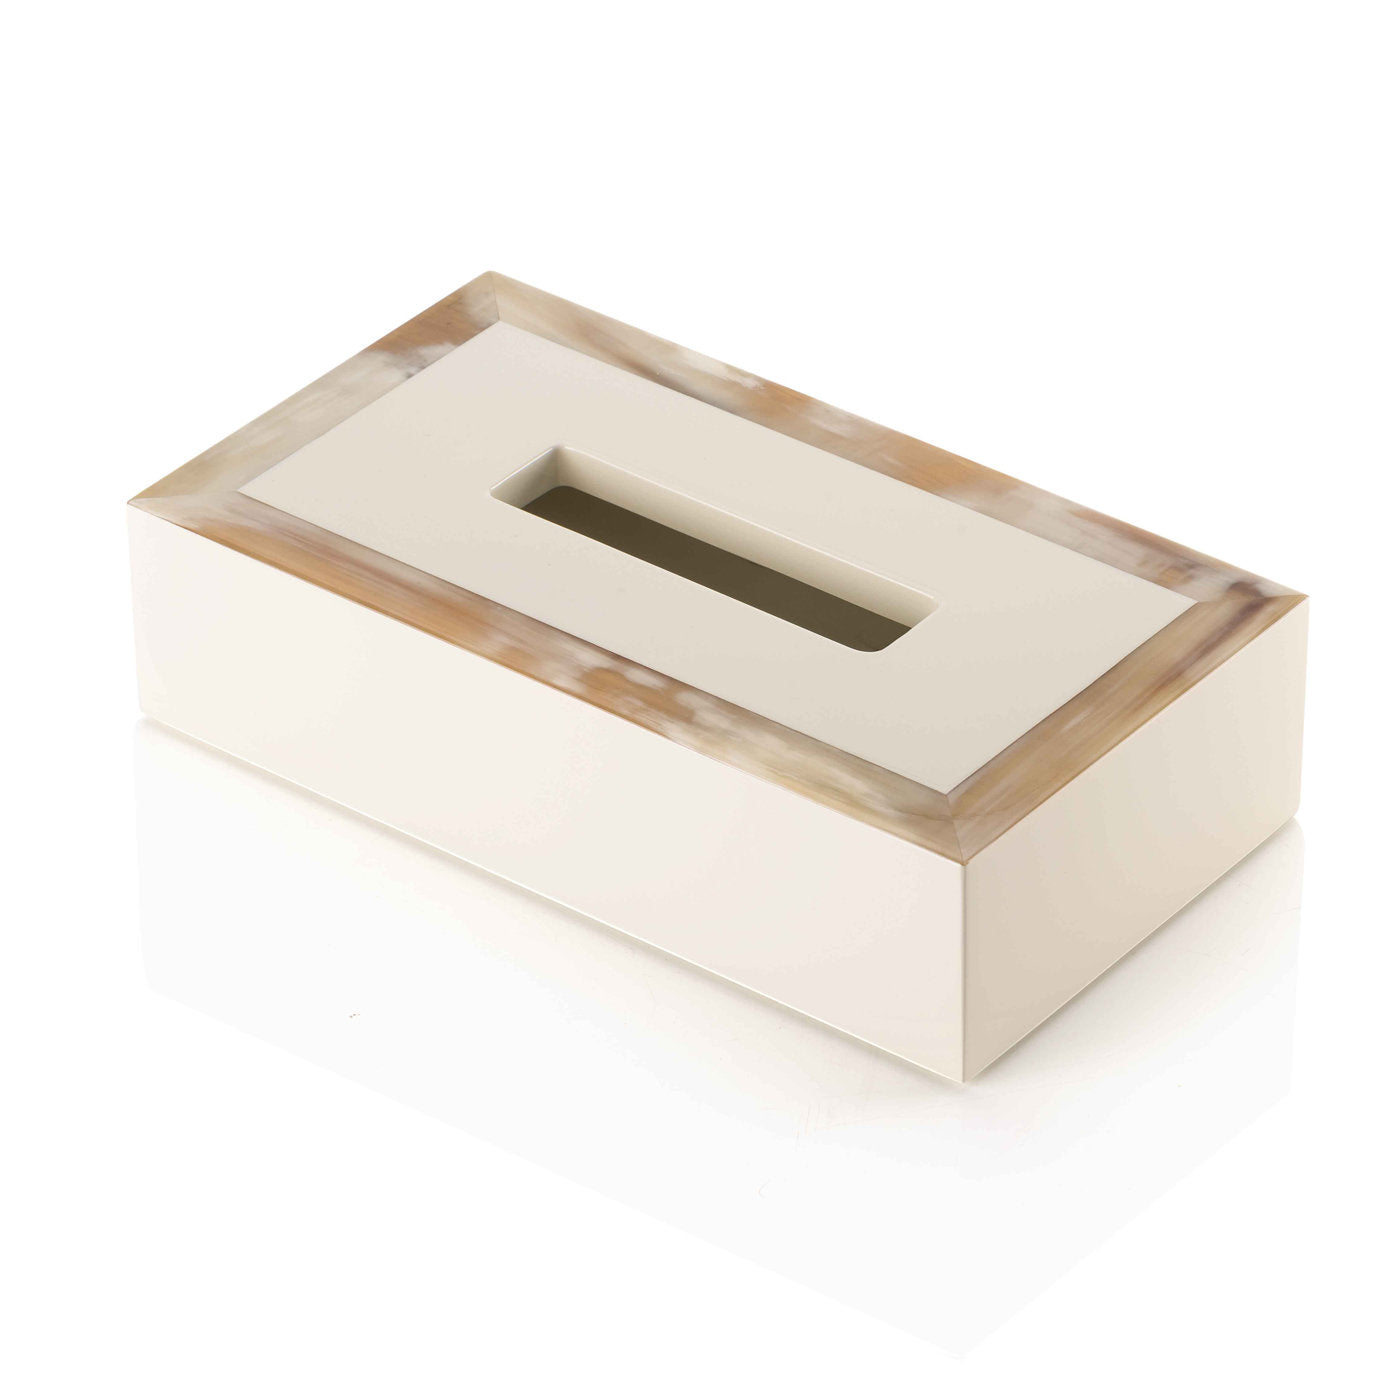 Ivory Tissue Box Holder - Alternative view 1